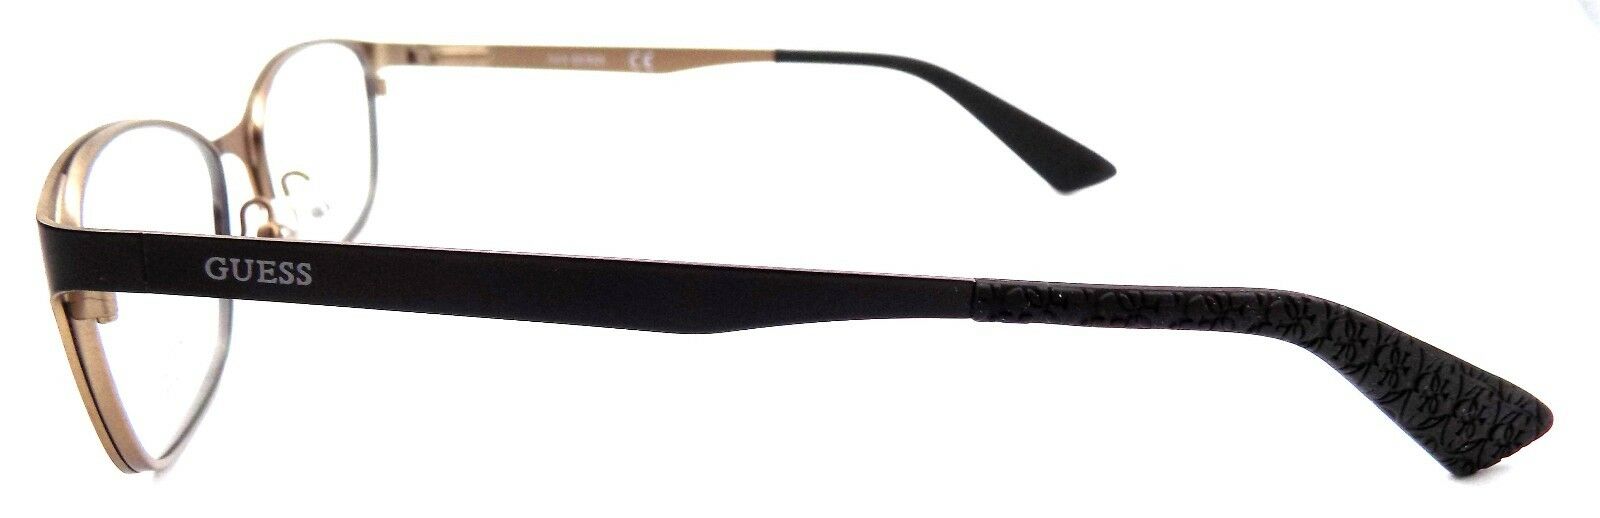 3-GUESS GU2563 002 Women's Eyeglasses Frames Metal 52-16-135 Matte Black + CASE-664689787876-IKSpecs